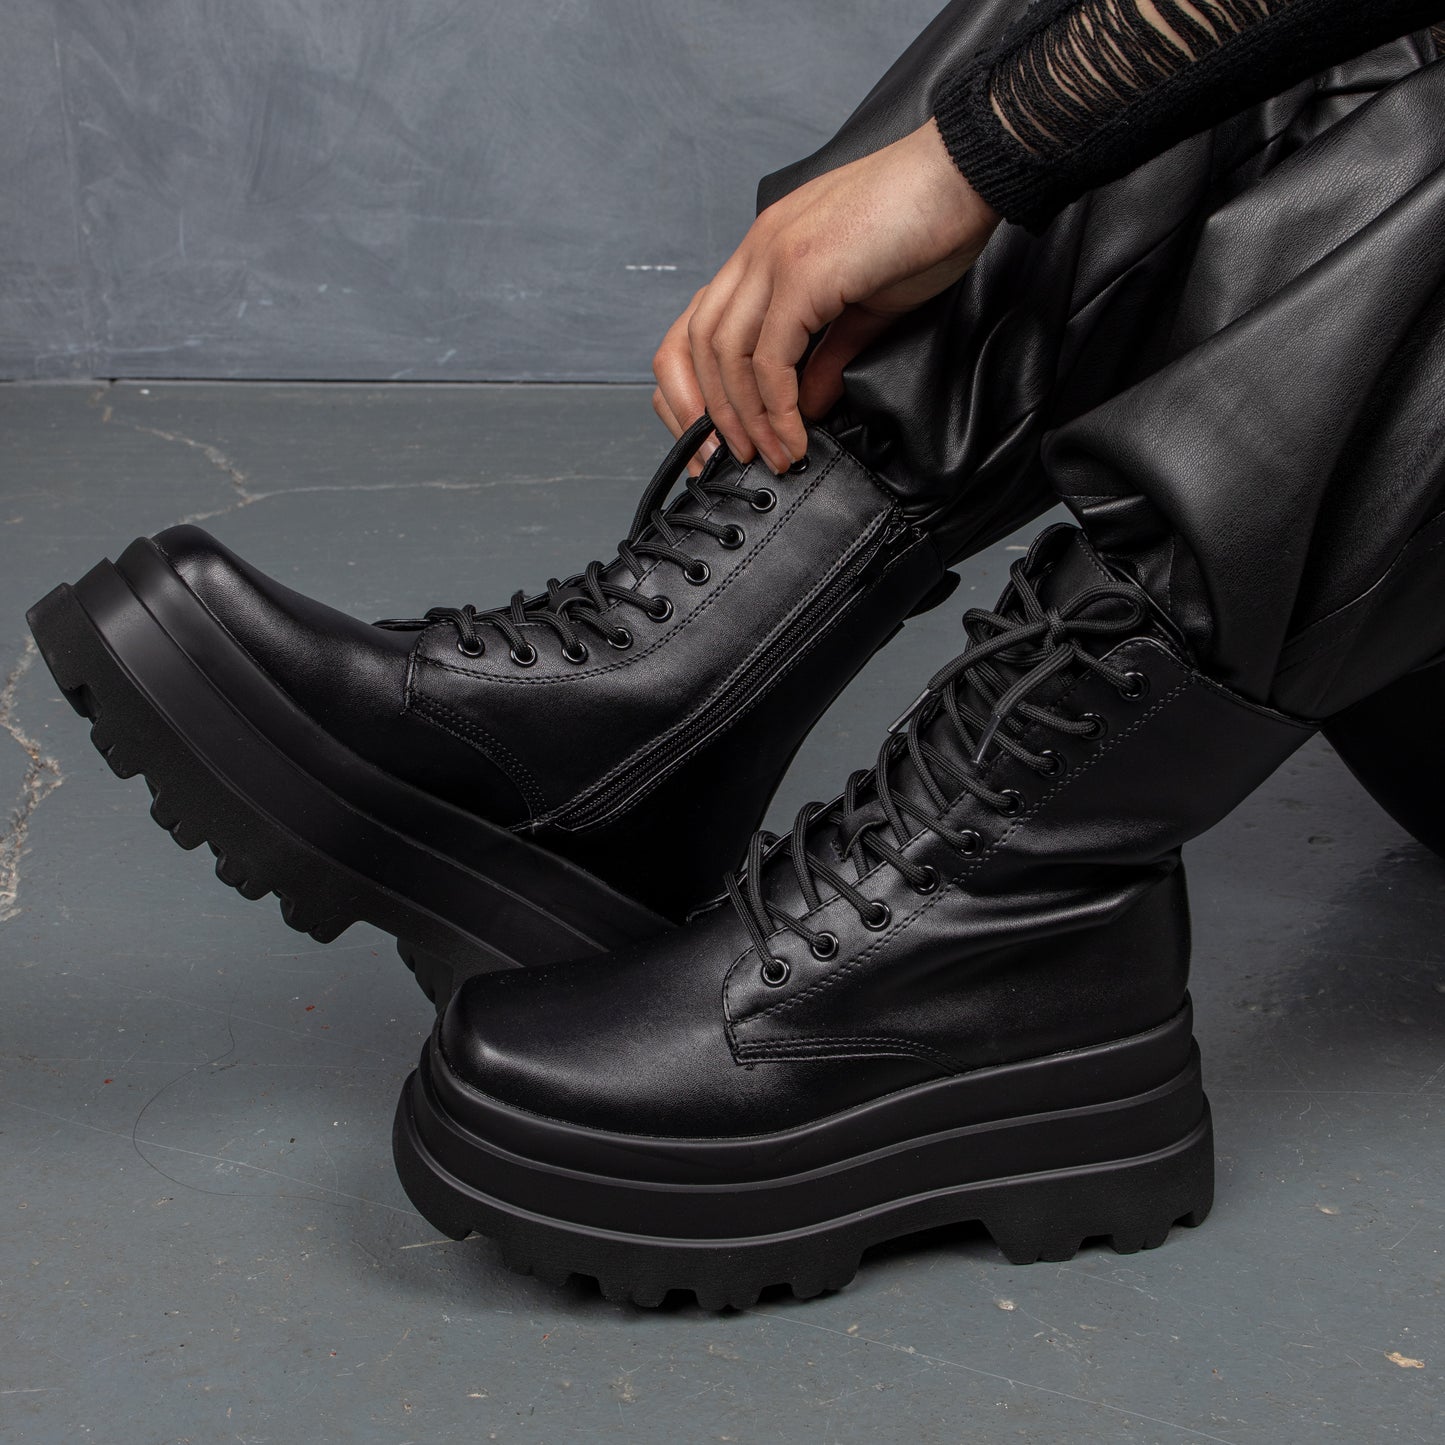 Deathwatch Trident Platform Boots - Ankle Boots - KOI Footwear - Black - Platform Detail